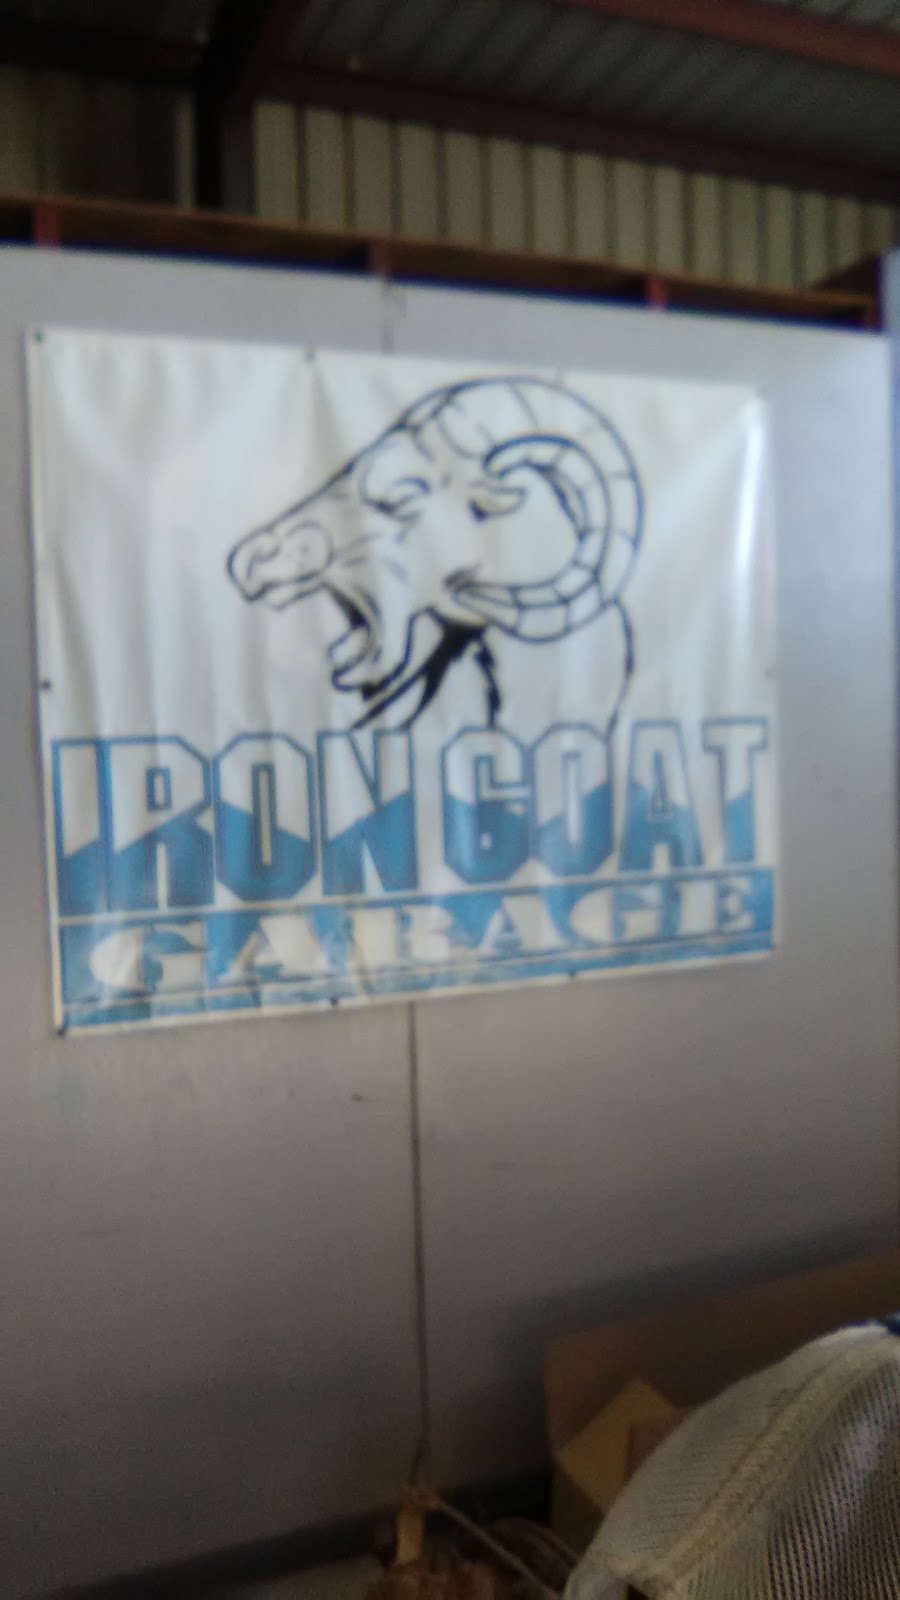 Iron Goat Garage | 1011 1st Pl Blvd, Yukon, OK 73099 | Phone: (405) 431-0408